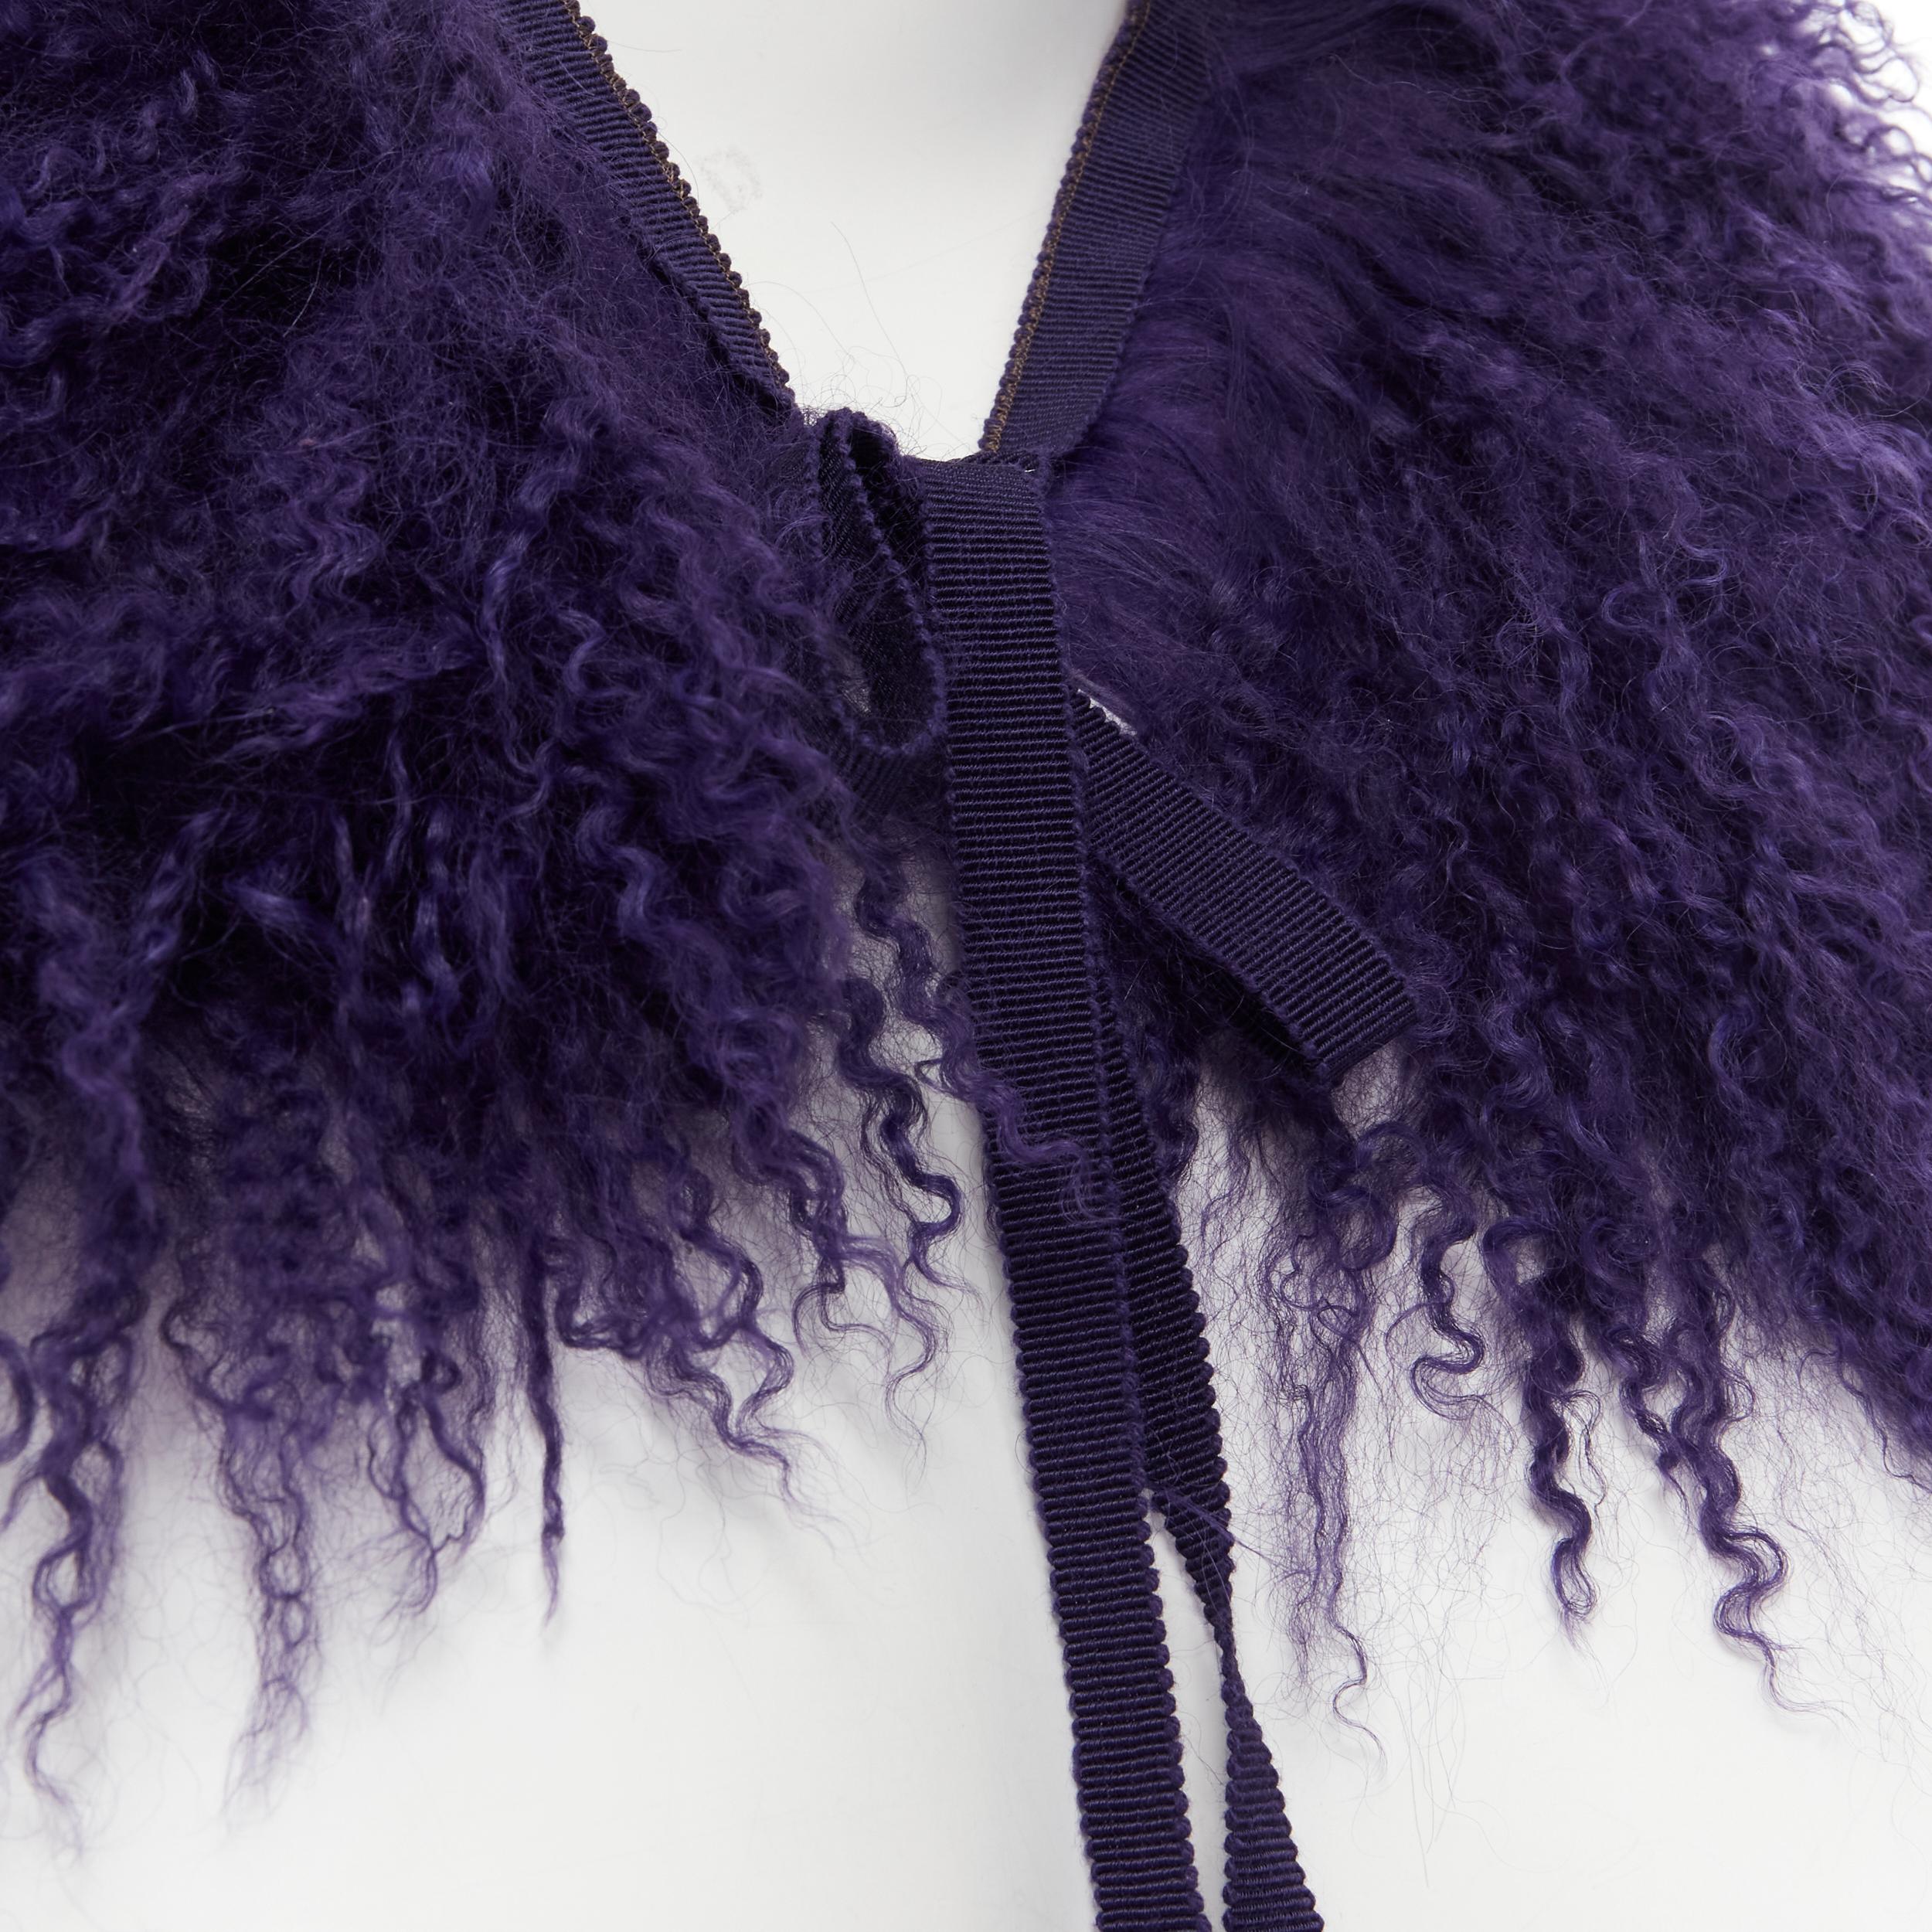 MIU MIU purple dye shaggy curly sheep shearling fur tie neck collar 
Reference: CELG/A00202 
Brand: Miu Miu 
Designer: Miuccia Prada 
Material: Fur 
Color: Purple 
Pattern: Solid 
Closure: Tie 
Made in: Italy 

CONDITION: 
Condition: Excellent, this